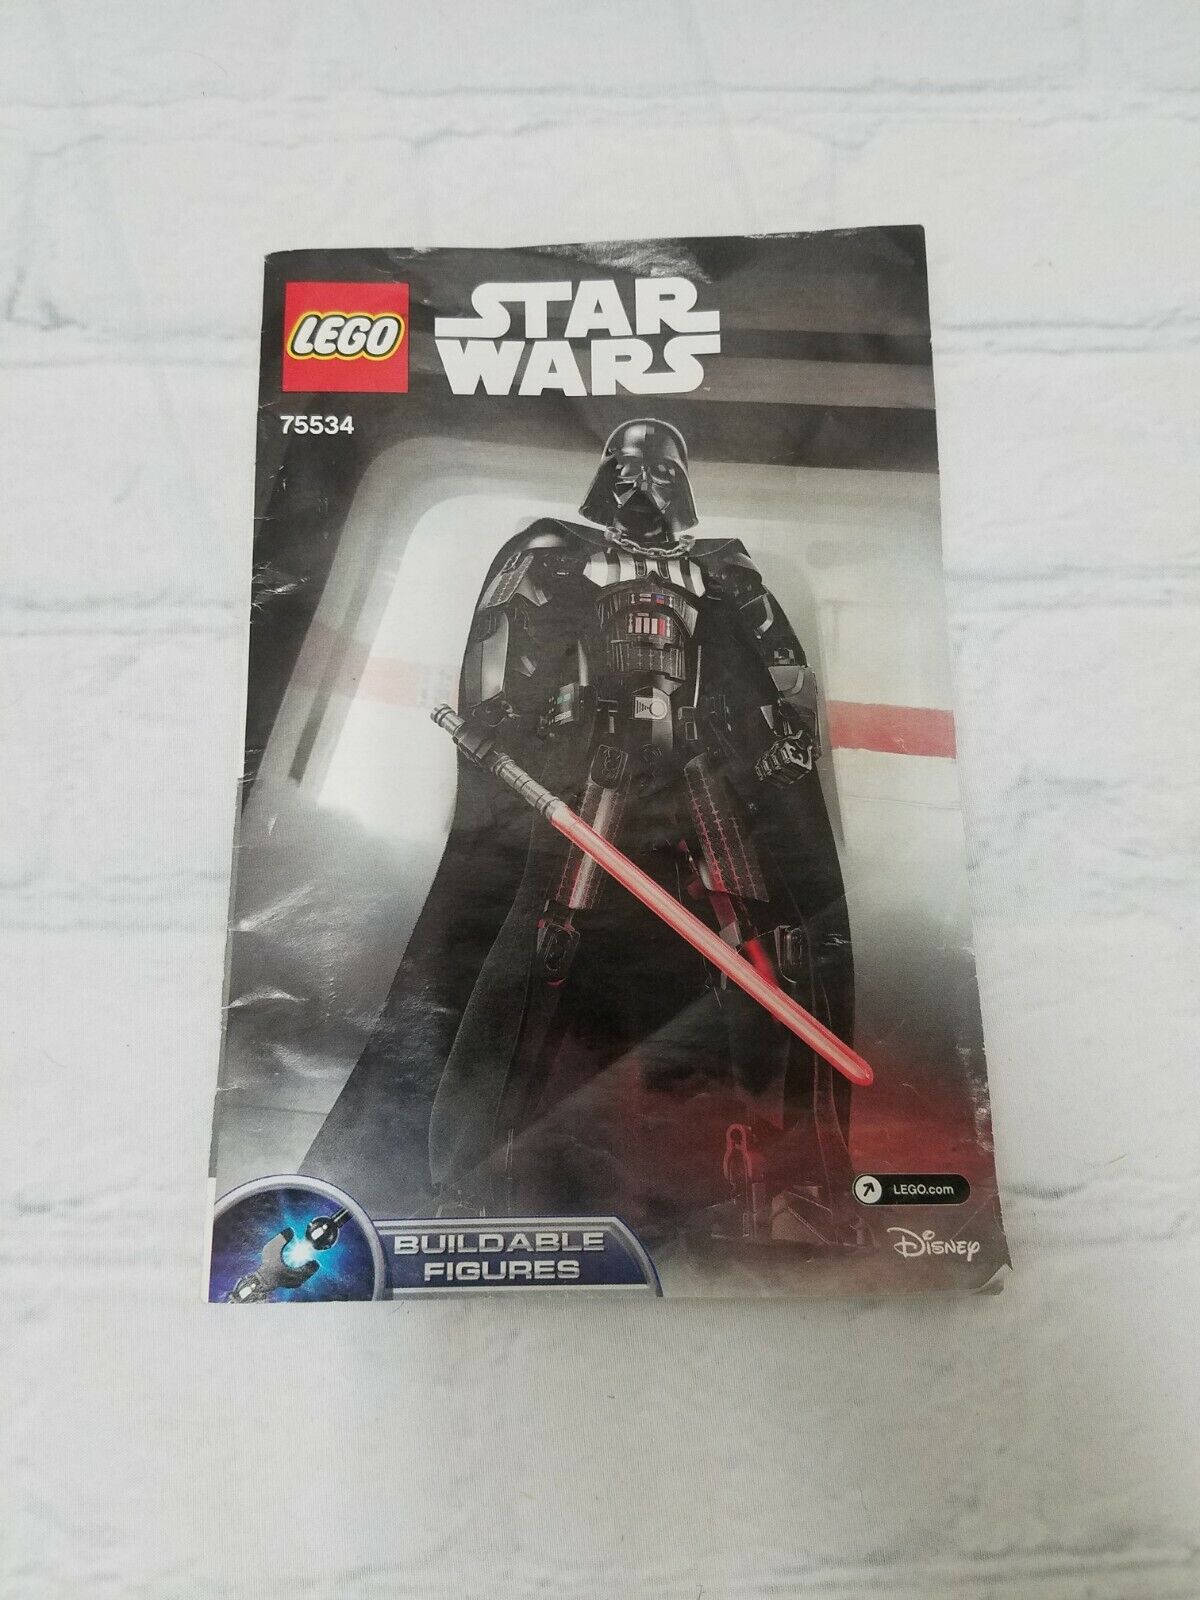 LEGO Star Wars DARTH VADER 75534 Buildable Figure Sealed